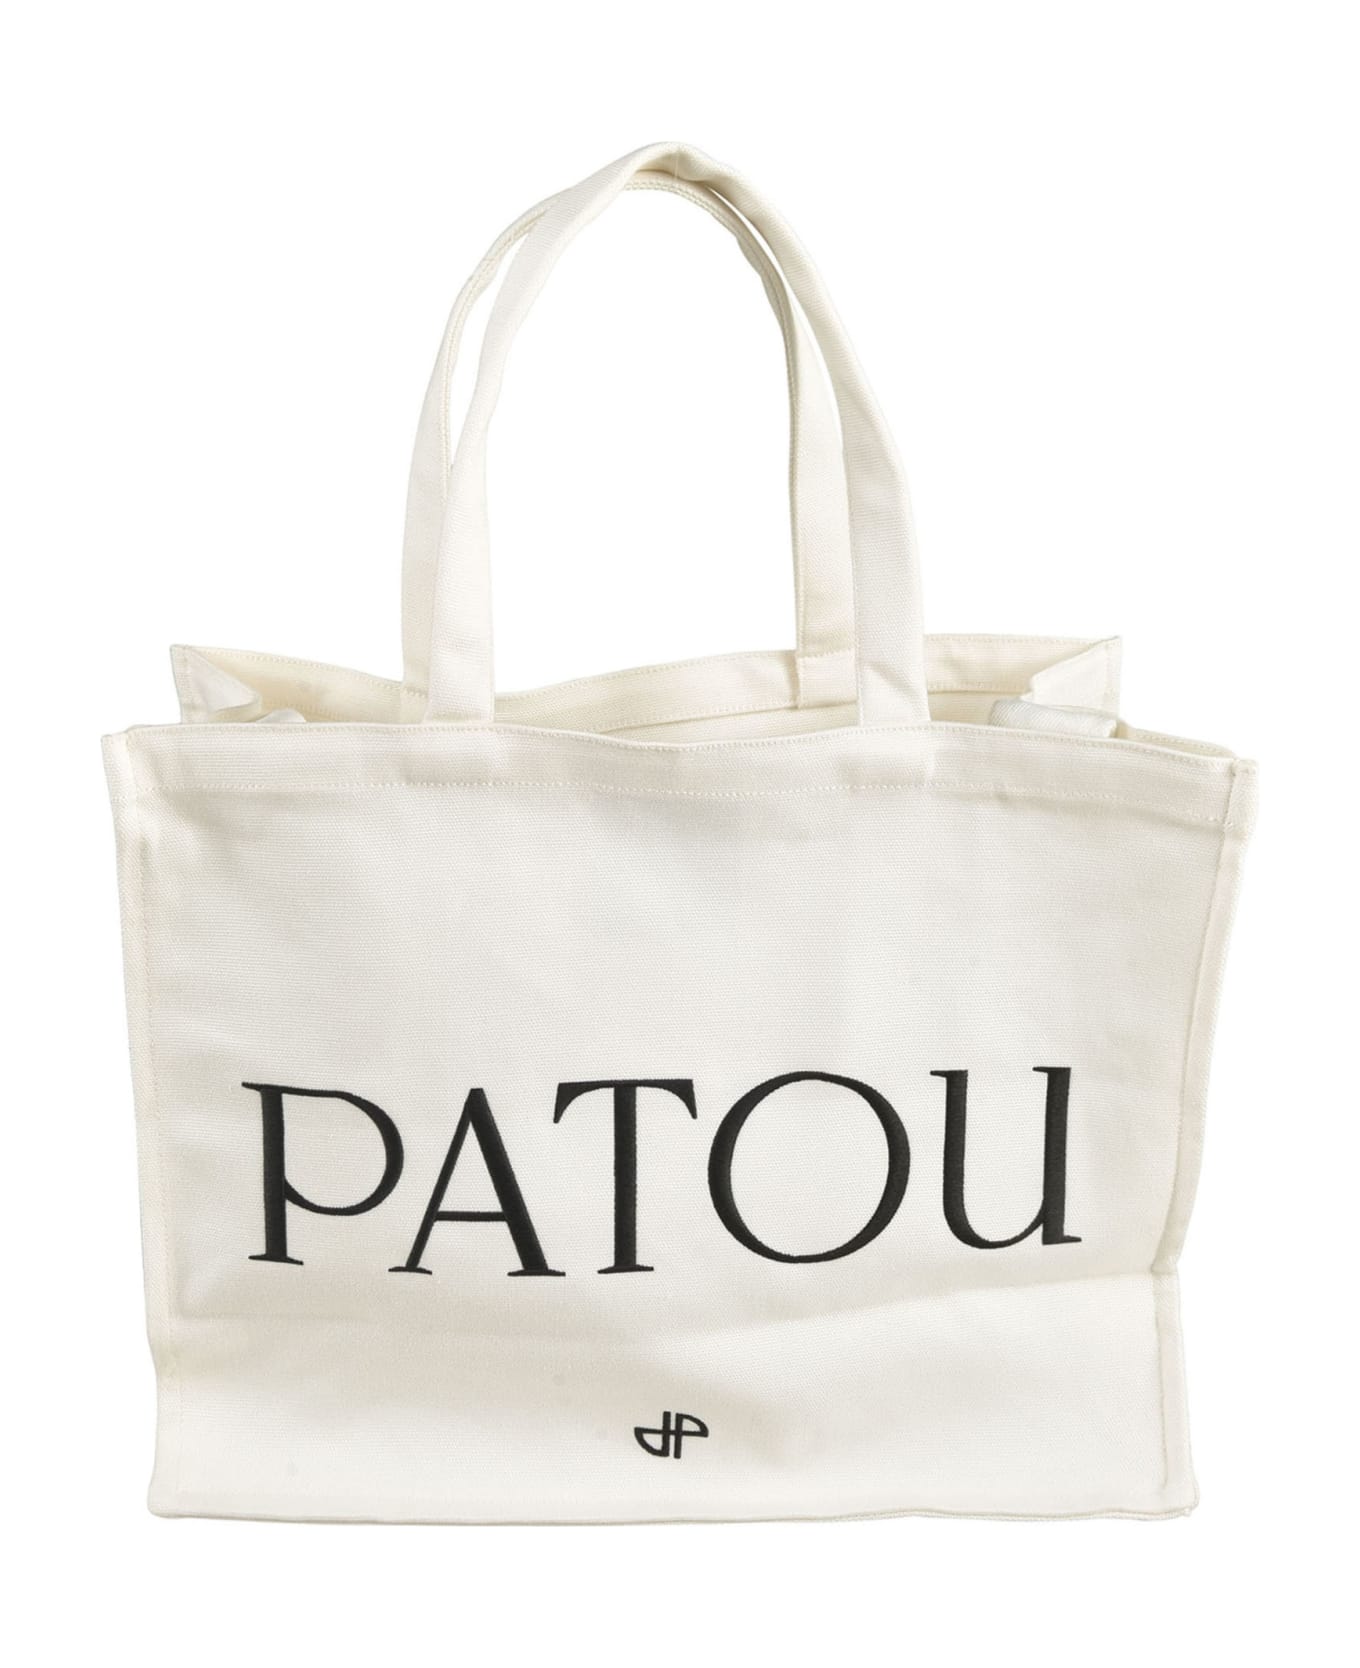 Patou Logo Large Tote - WHITE トートバッグ